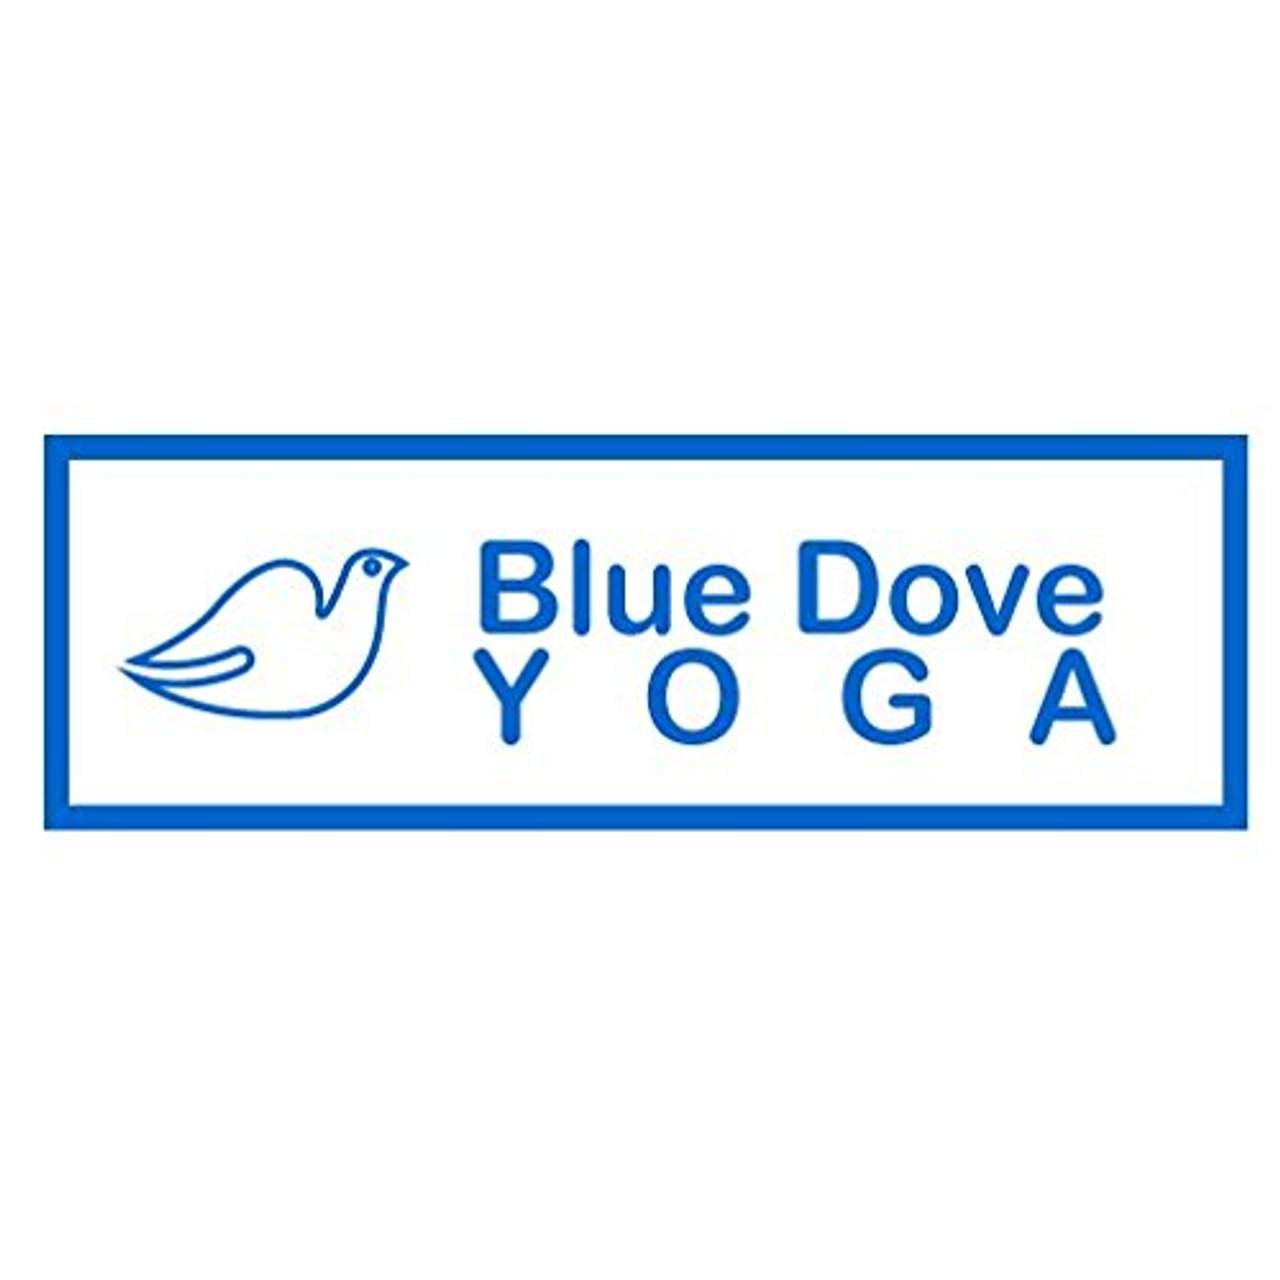 Blue Dove Yoga Mikrofaser Yoga Handtuch 182,9 cm lang 61 cm breit rutschfeste leicht